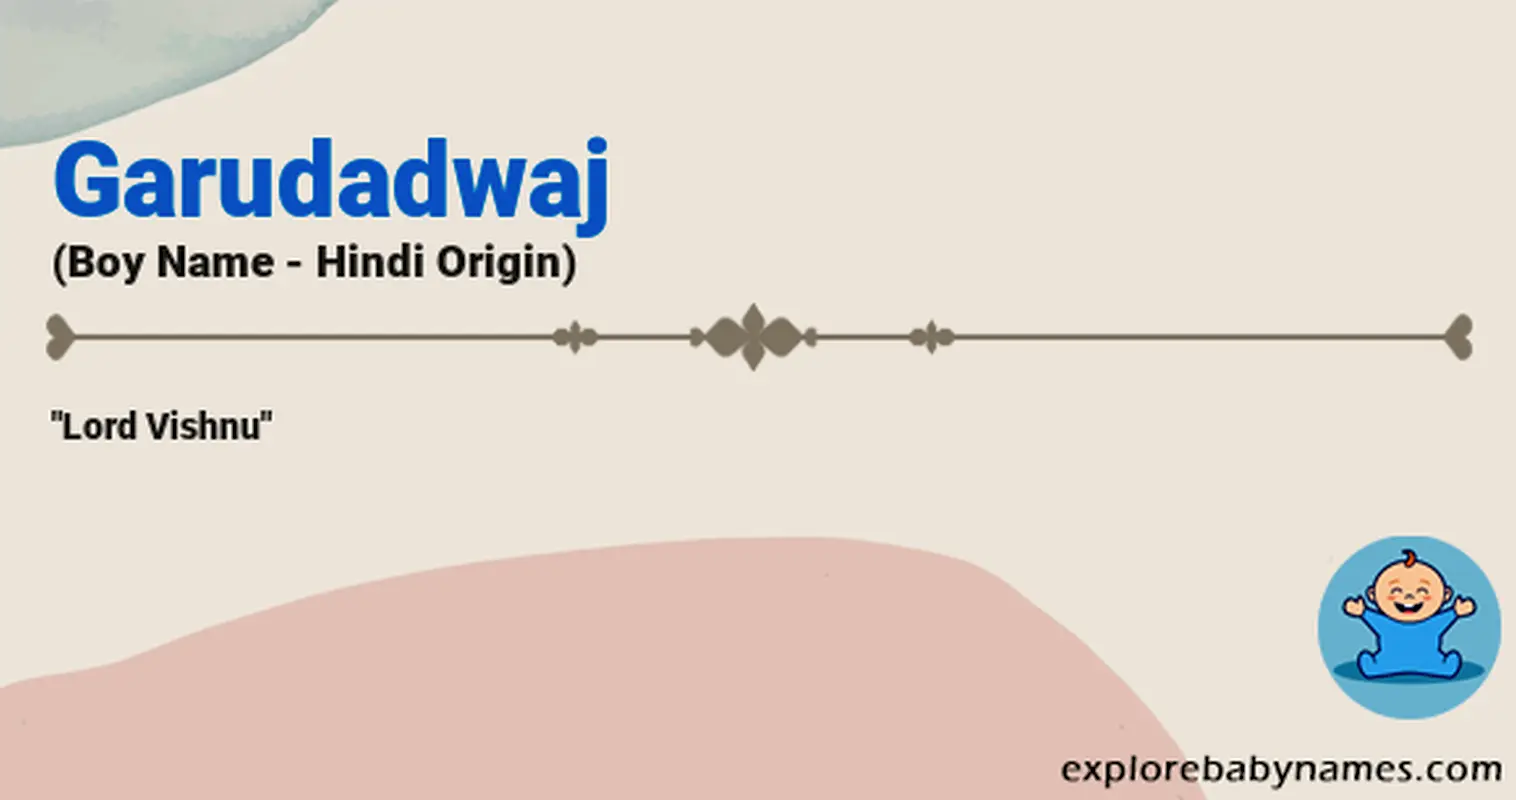 Meaning of Garudadwaj